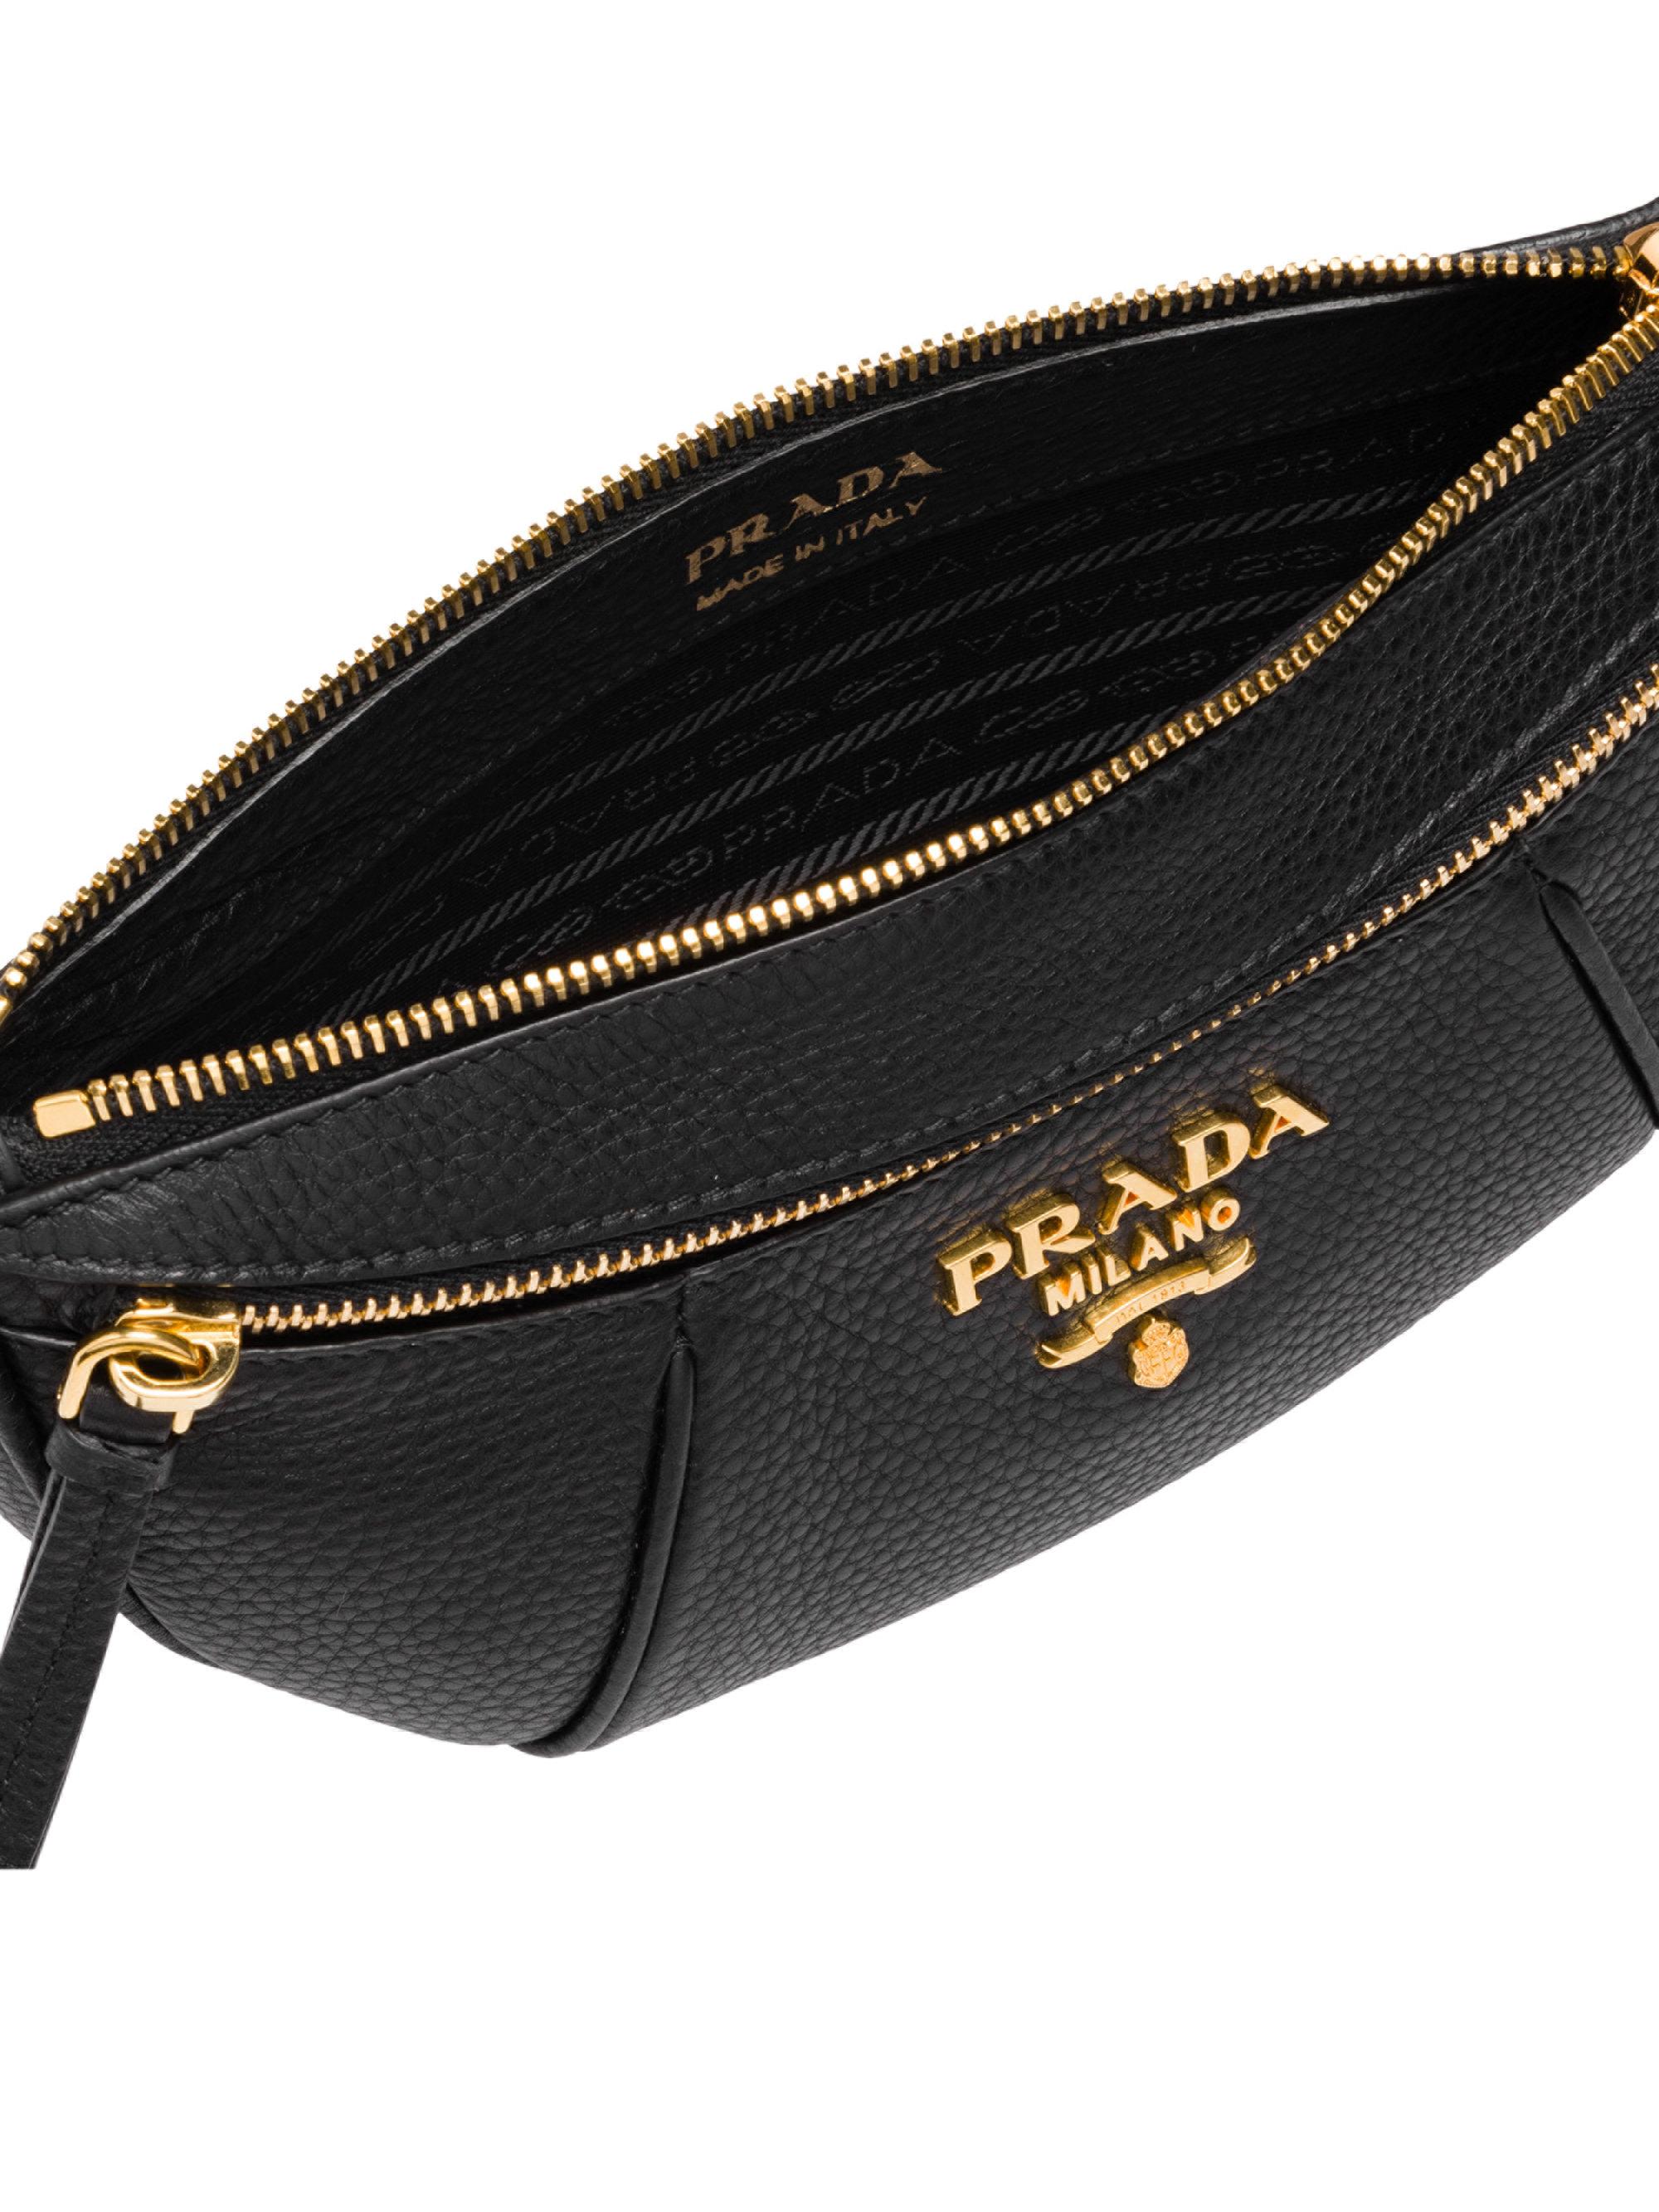 Prada Vitello Daino Pebbled Leather Belt Bag in Black - Lyst